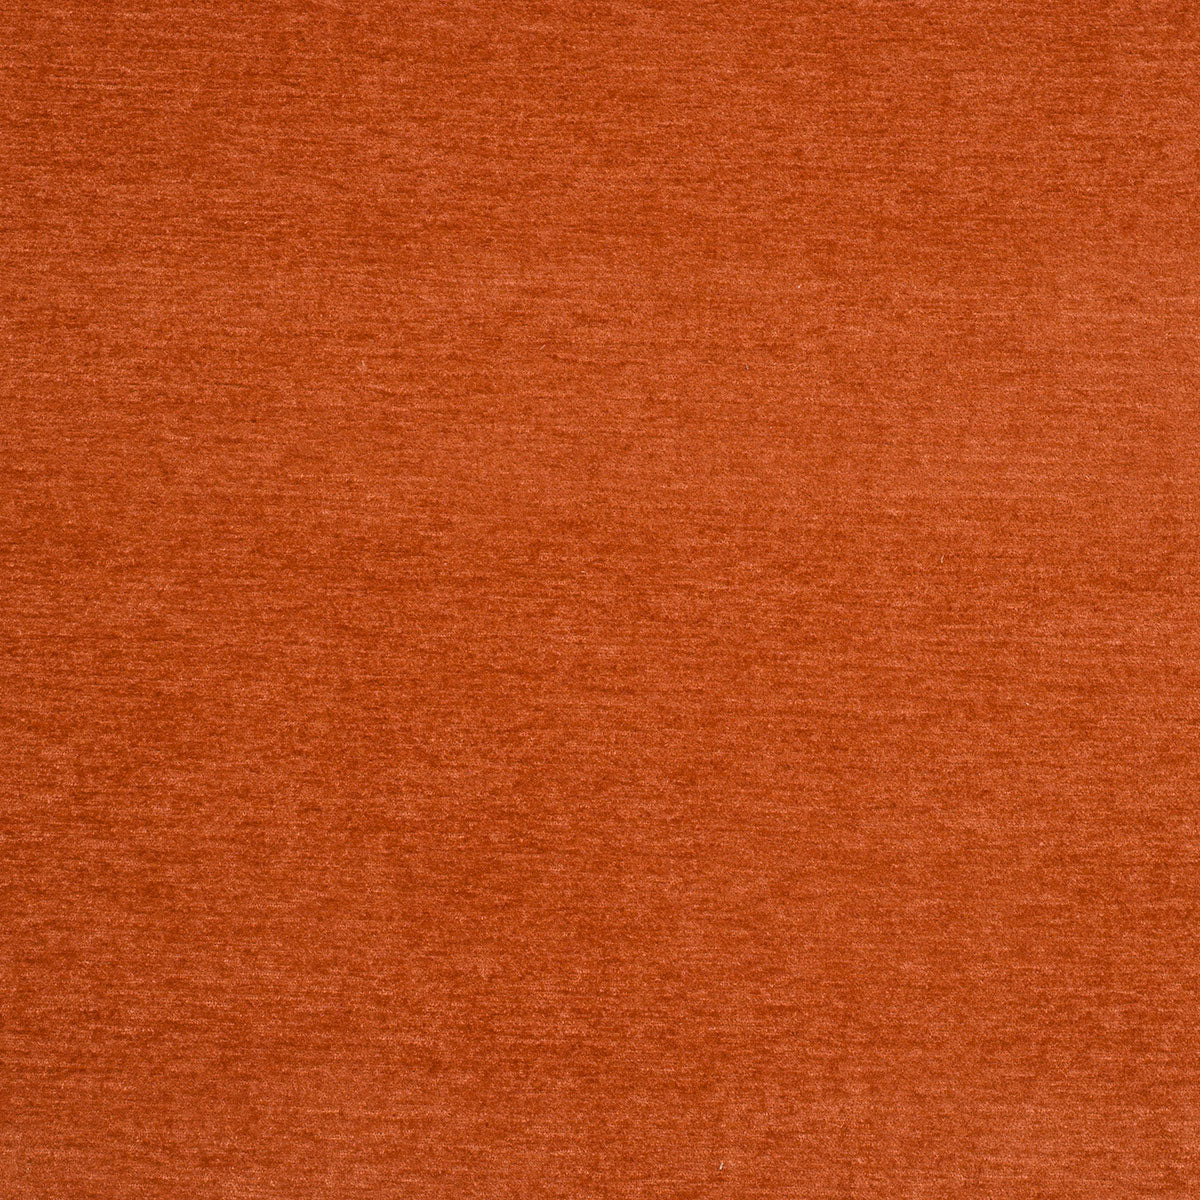 Orange Performance fabric sample